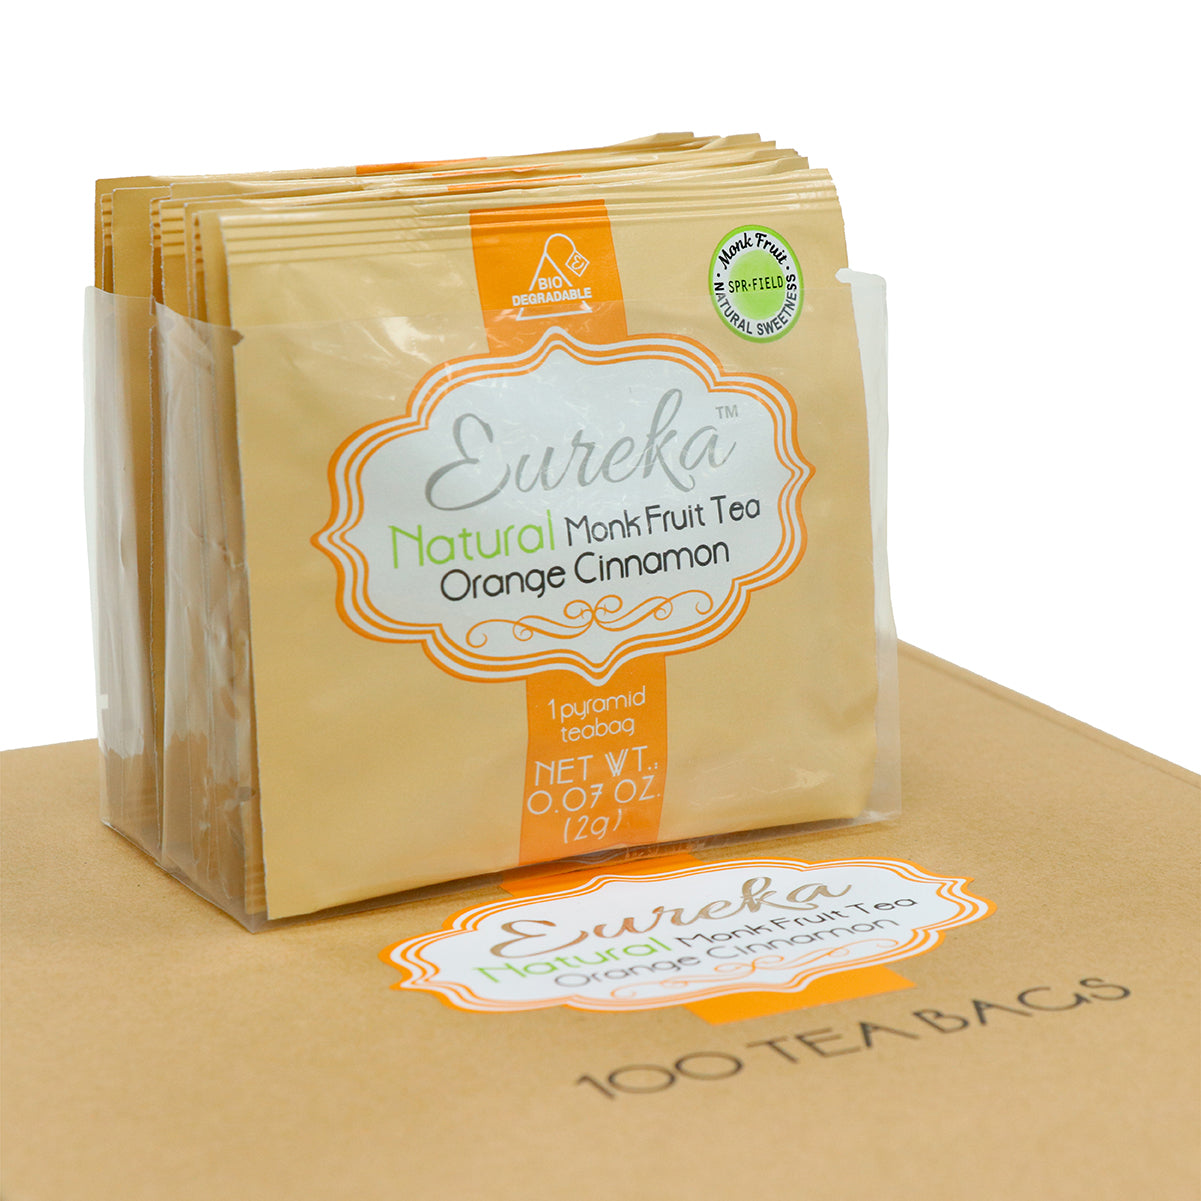 EUREKA Natural Monk Fruit Orange Cinnamon Tea (Value pack - 100pc)